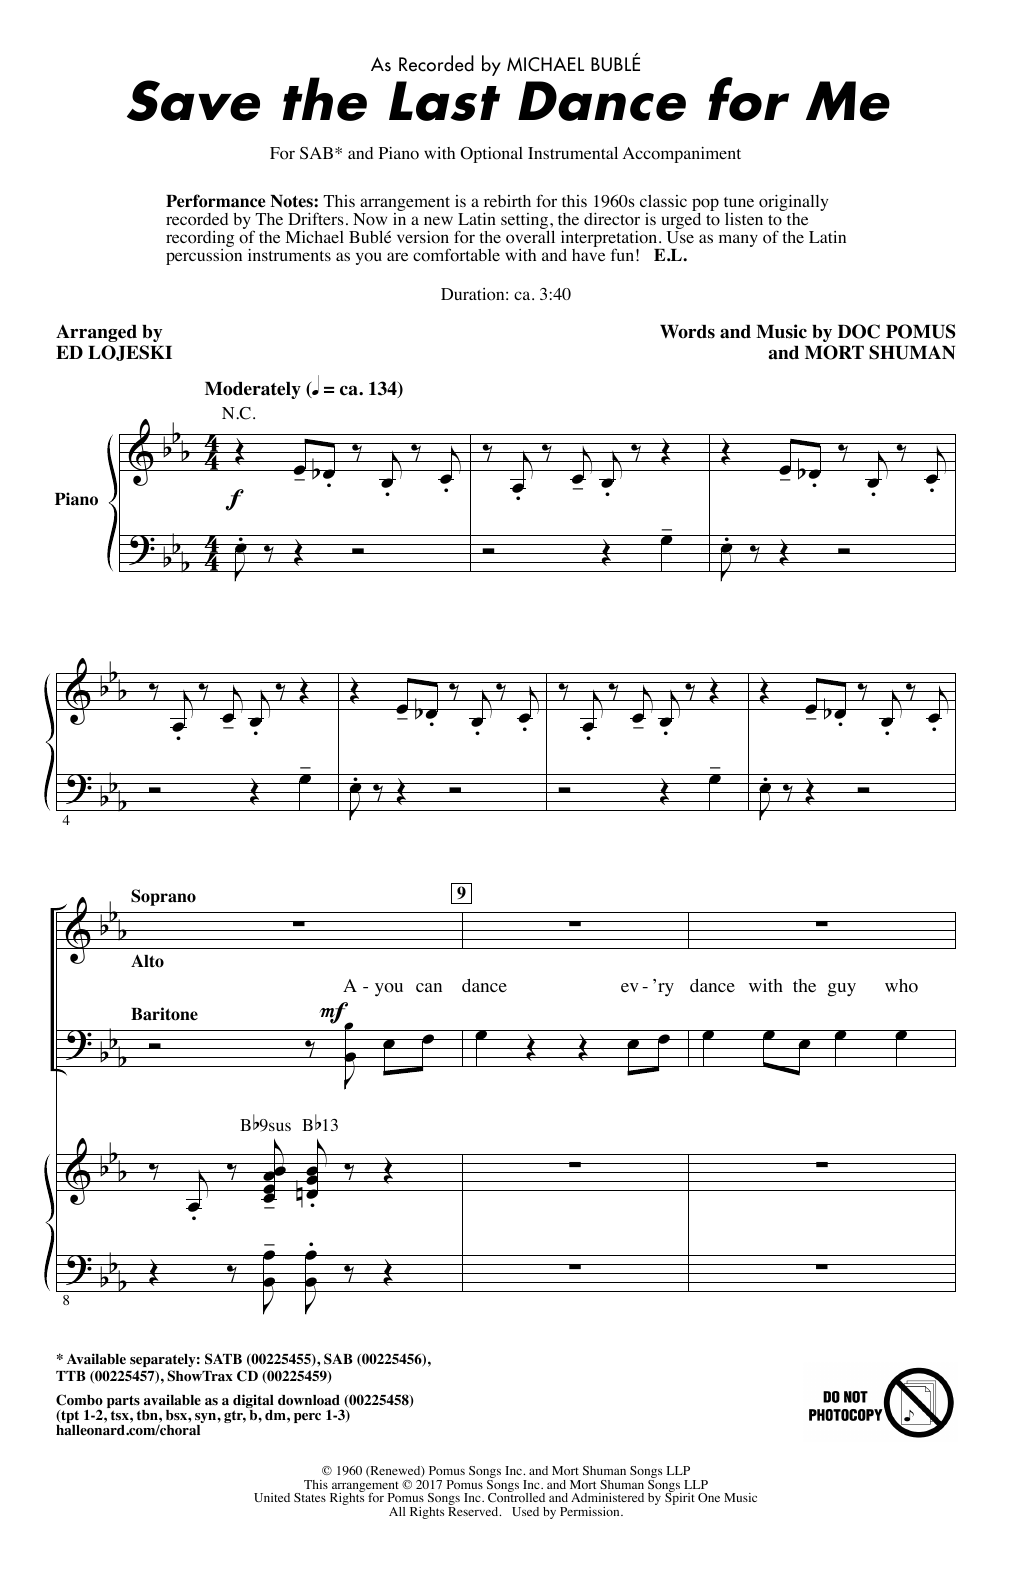 Michael Bublé Save The Last Dance For Me (arr. Ed Lojeski) Sheet Music Notes & Chords for SAB - Download or Print PDF